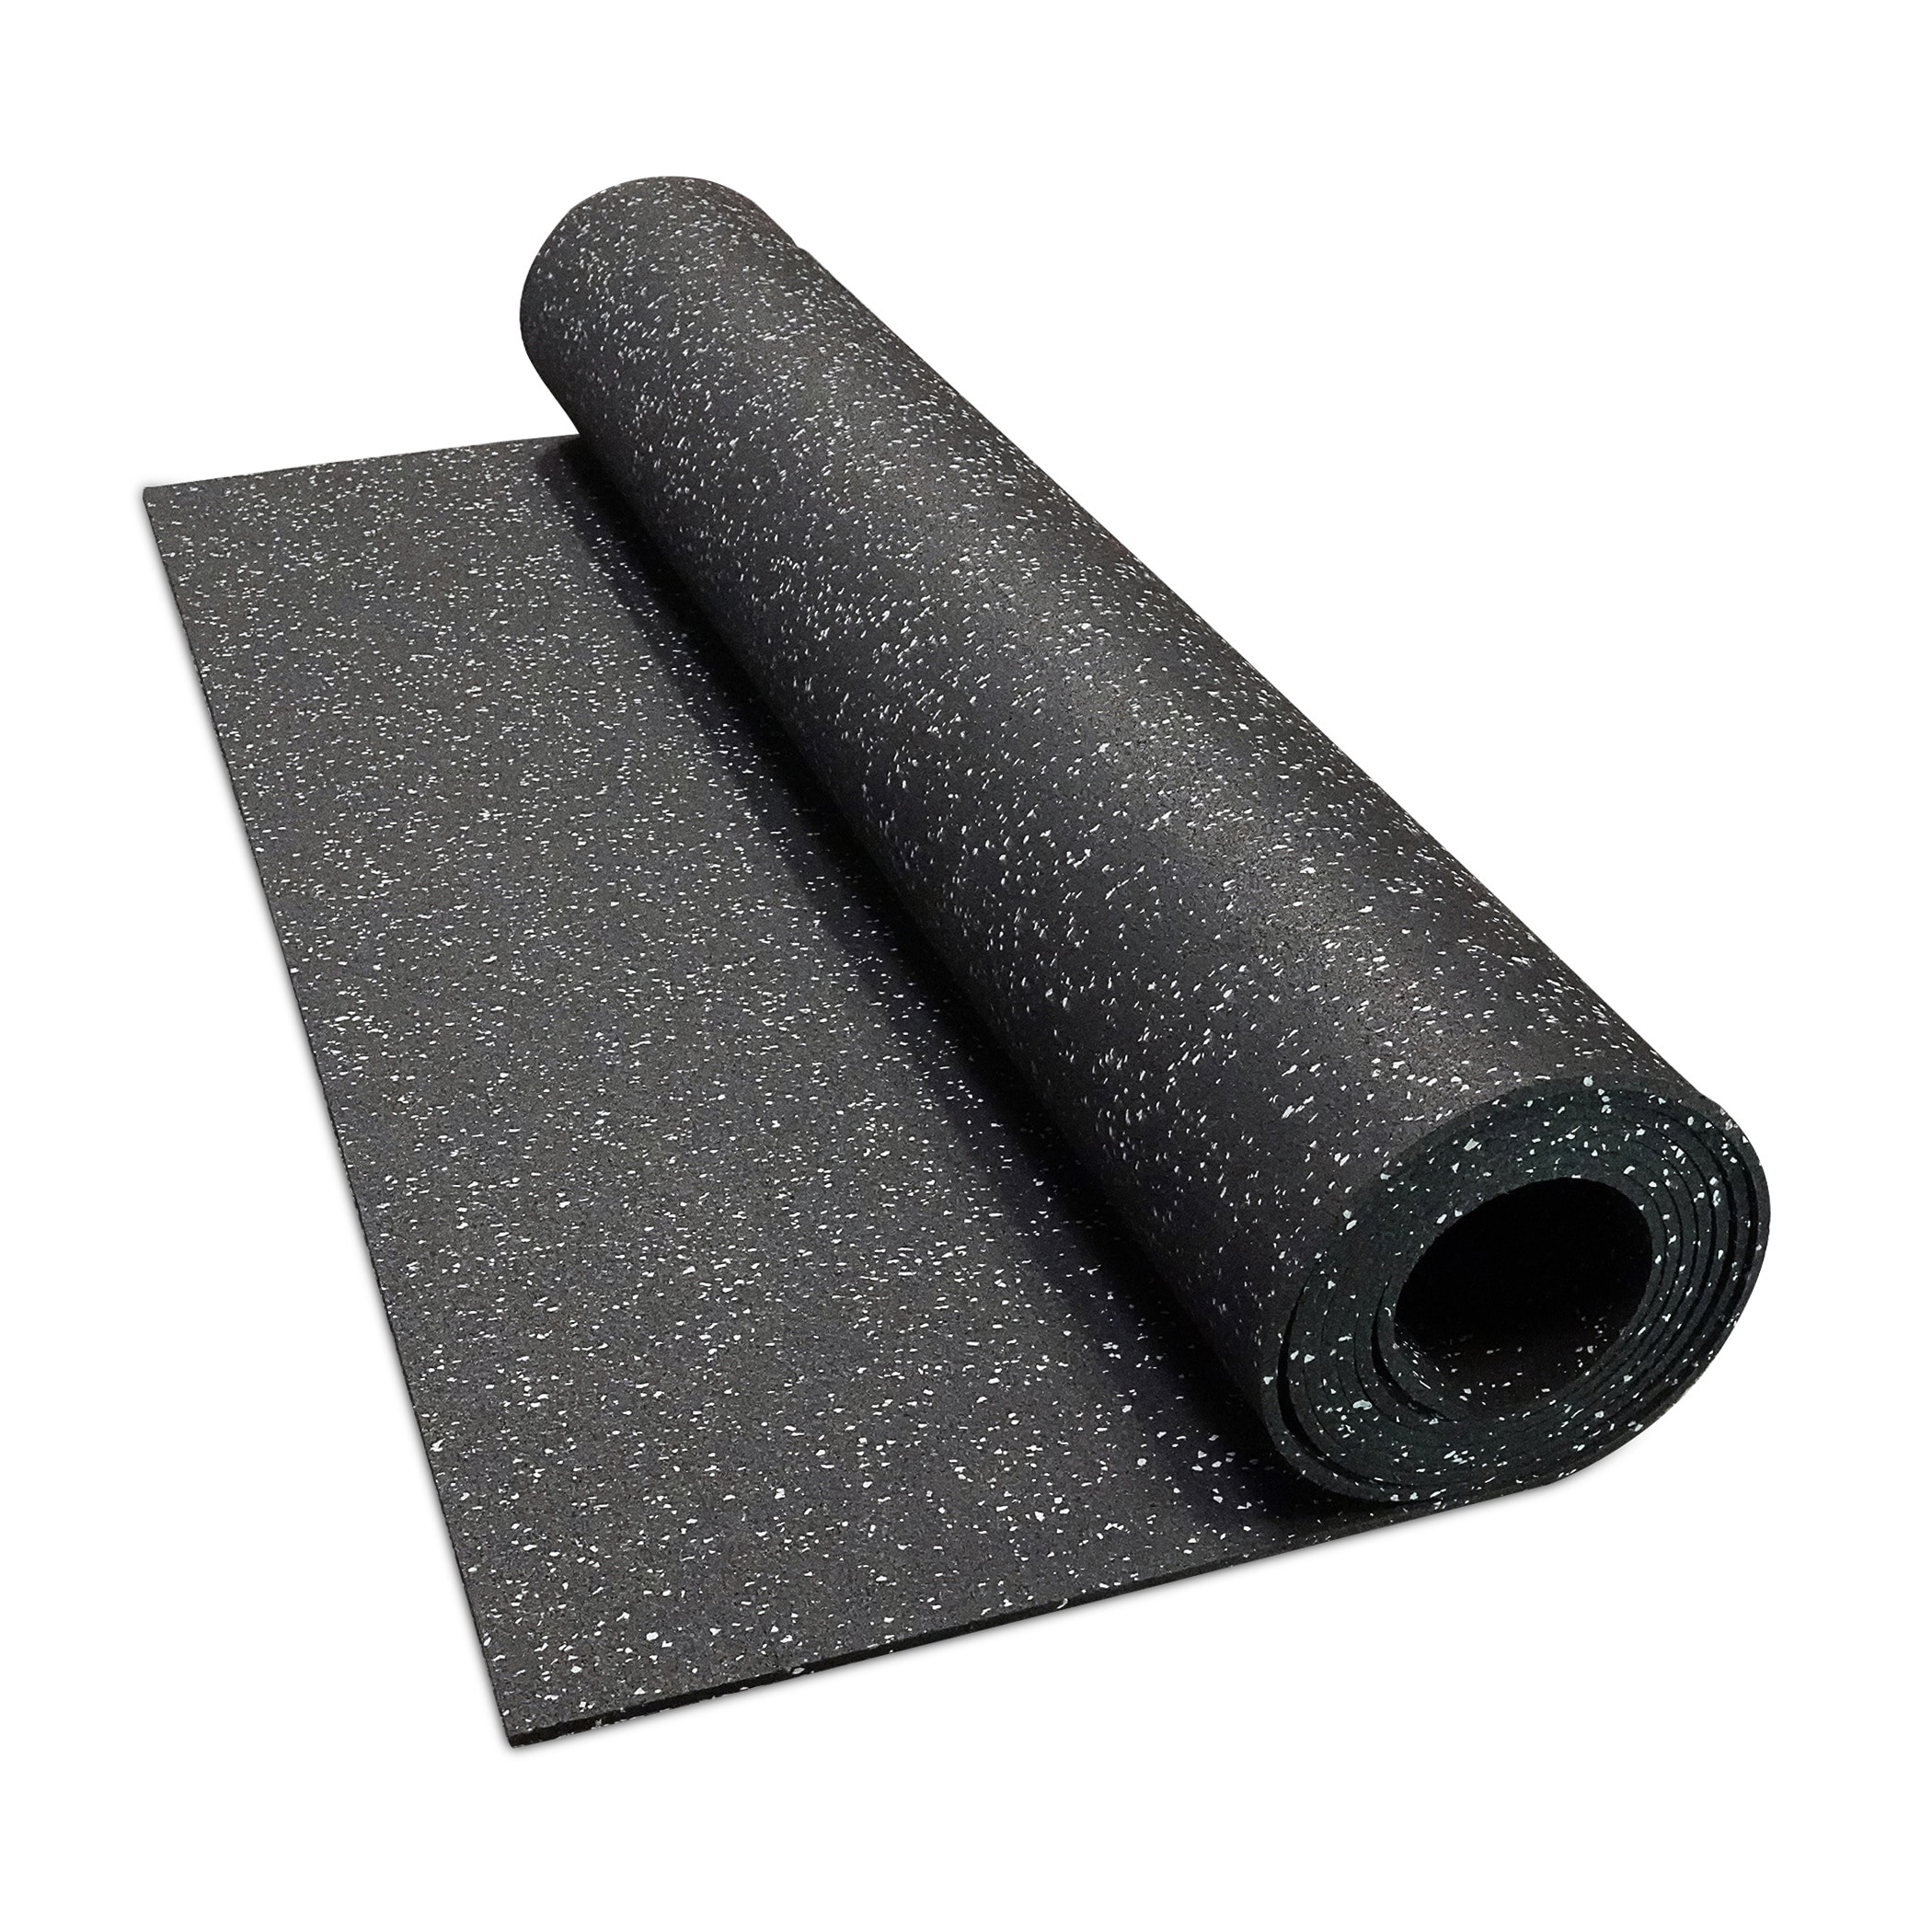 Next - 24ft Gym Flooring Exercise Mats - Black